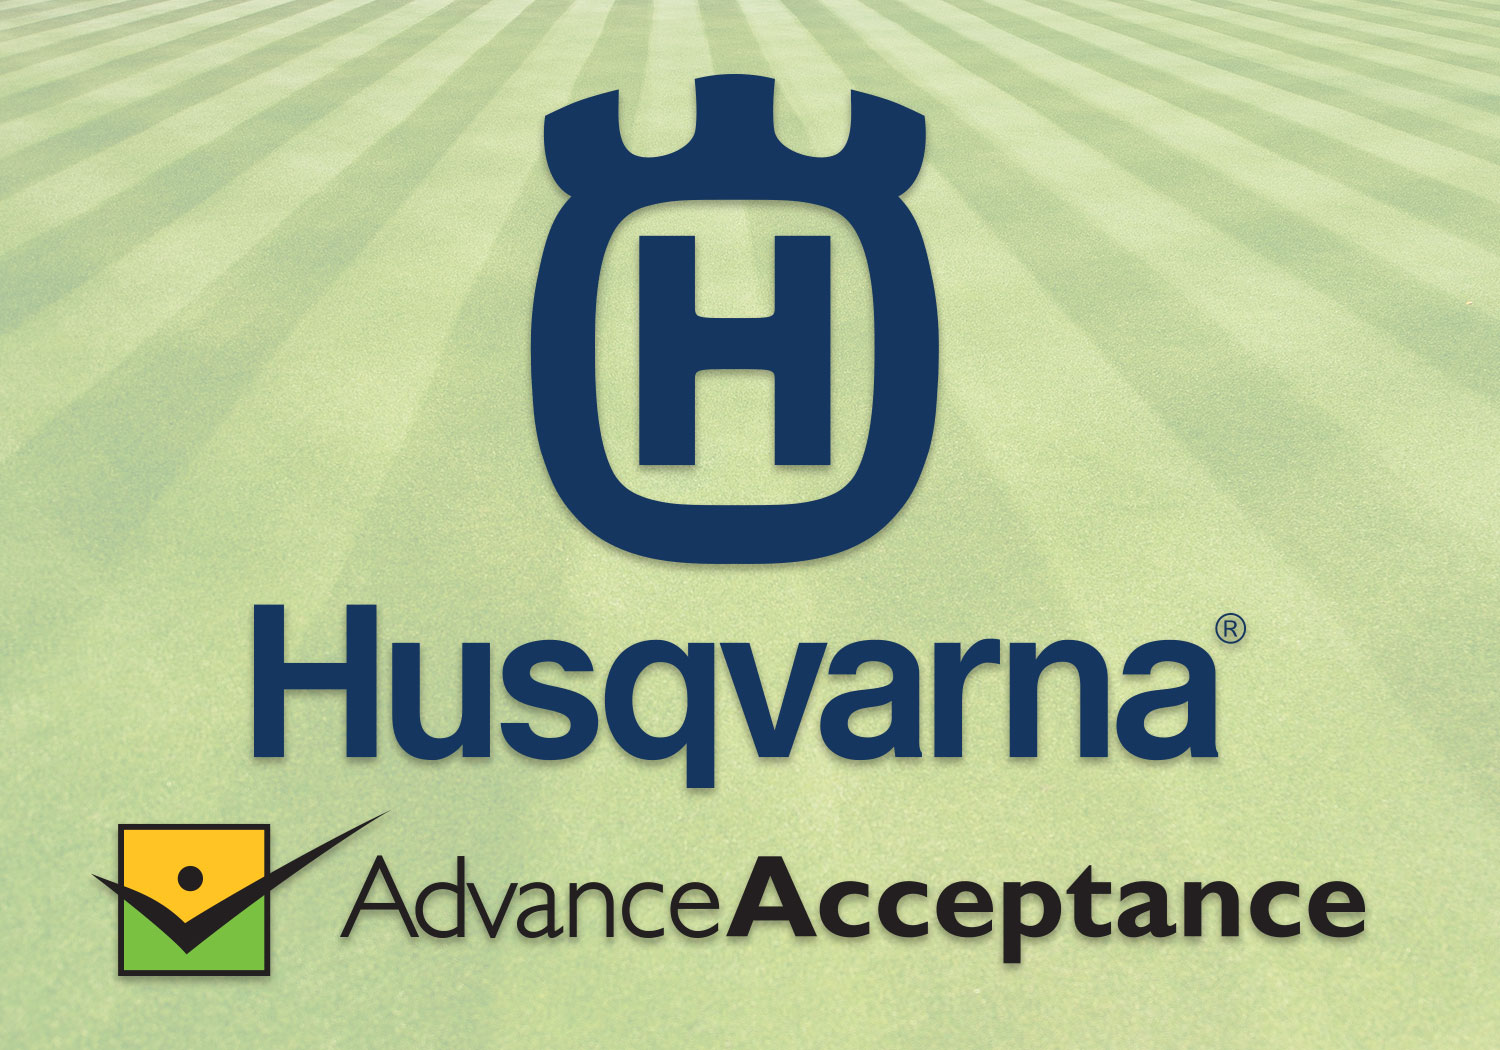 Husqvarna to Offer National Equipment Lease Programs